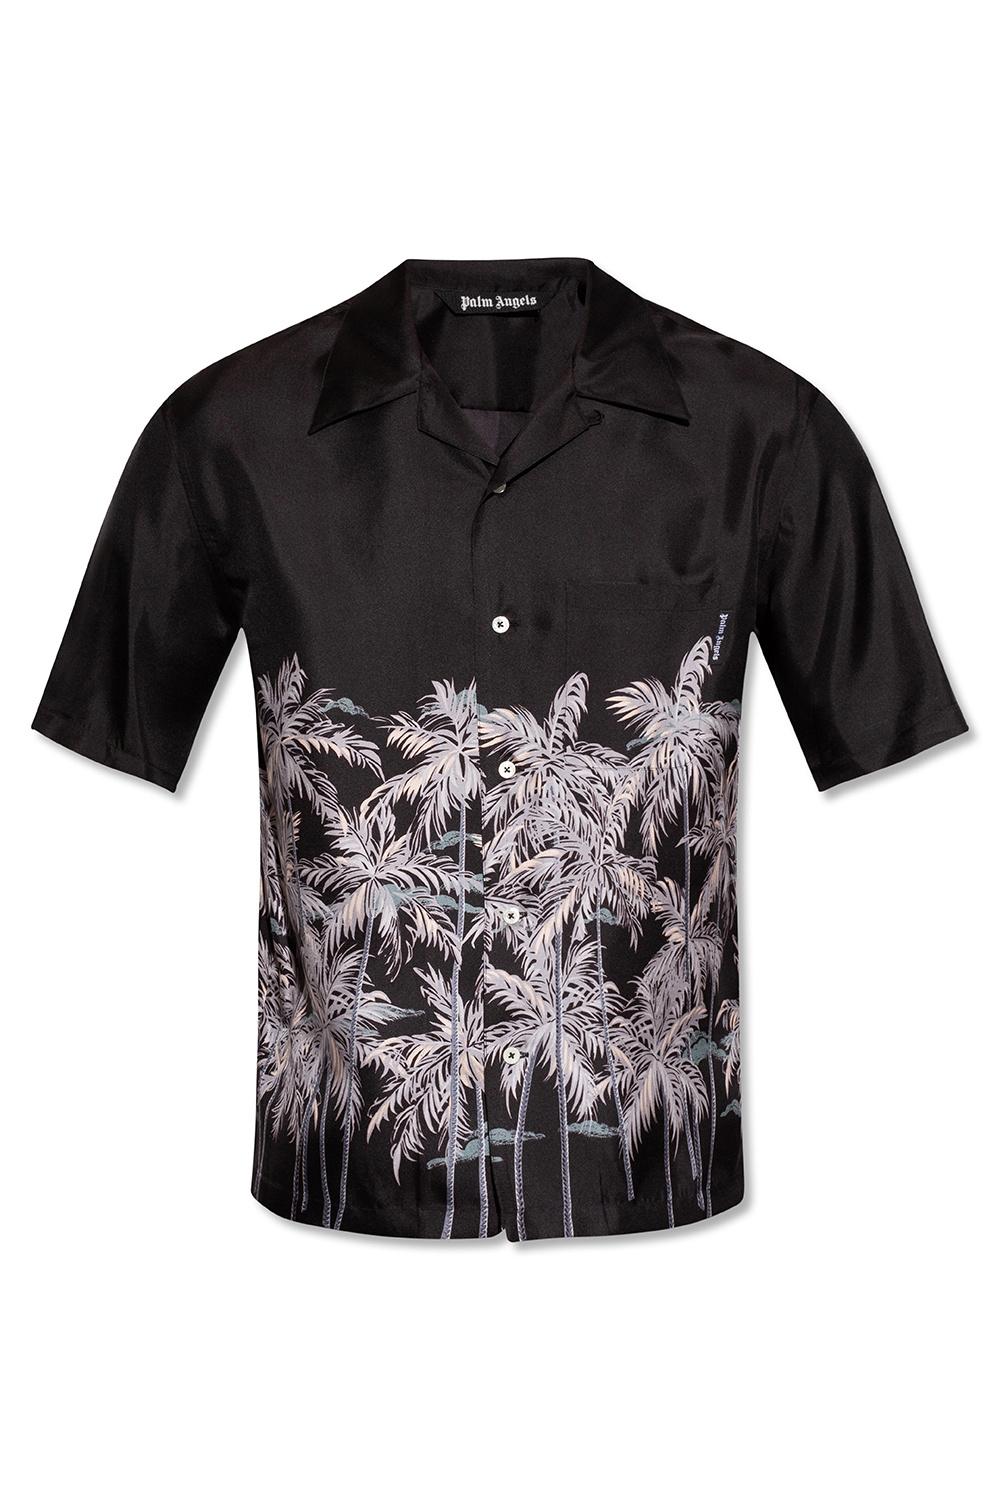 Palm Angels Monogram-Print Silk Shirt